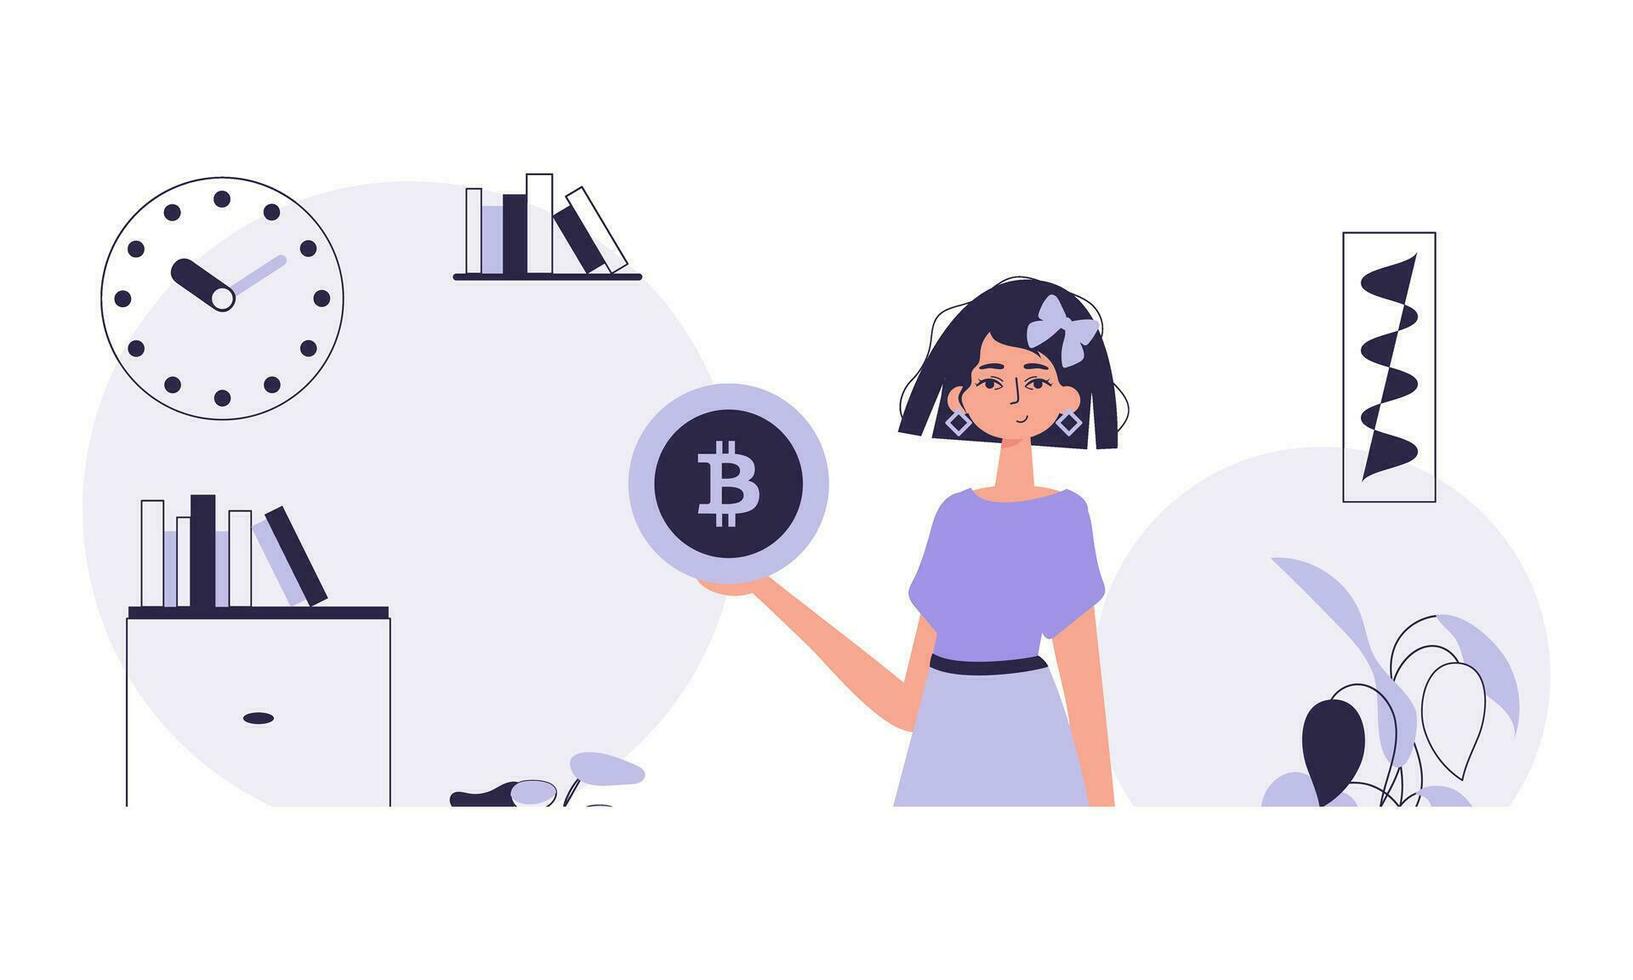 kryptovaluta begrepp. en kvinna innehar en bitcoin mynt i henne händer. karaktär i trendig stil. vektor